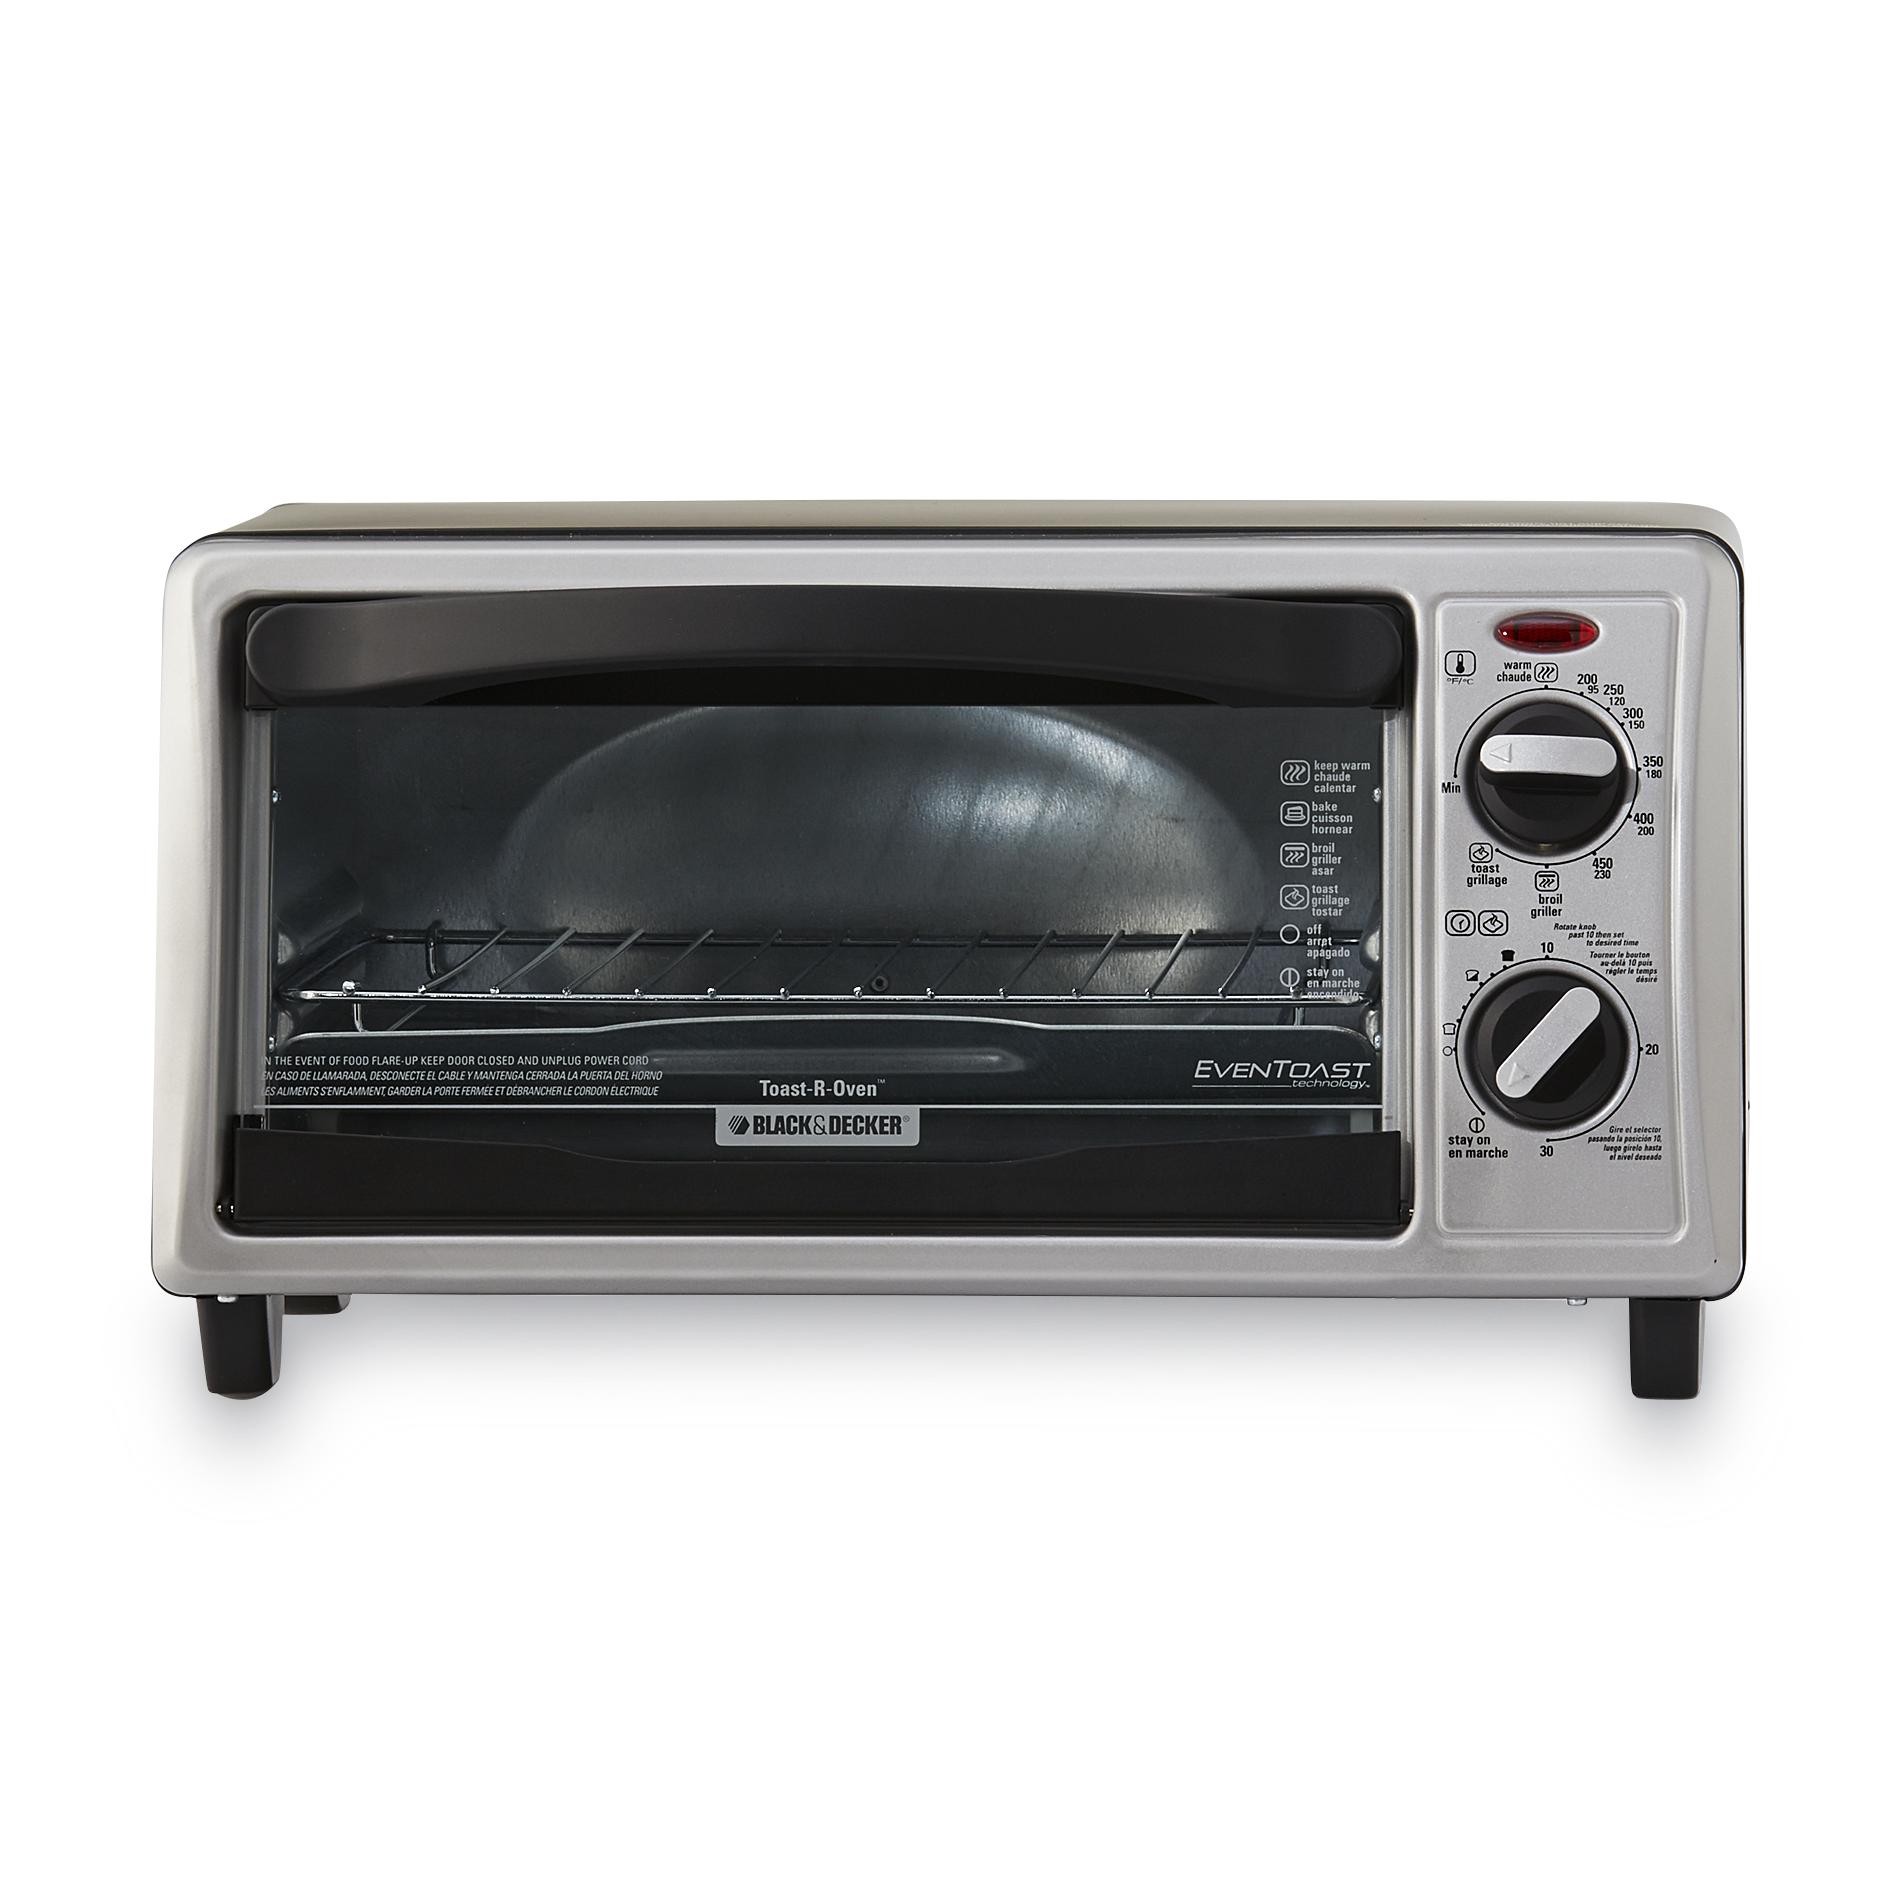 Black & Decker 4 Slice Toaster Oven—$24.99 + $5.25 in SYW Reward Points!